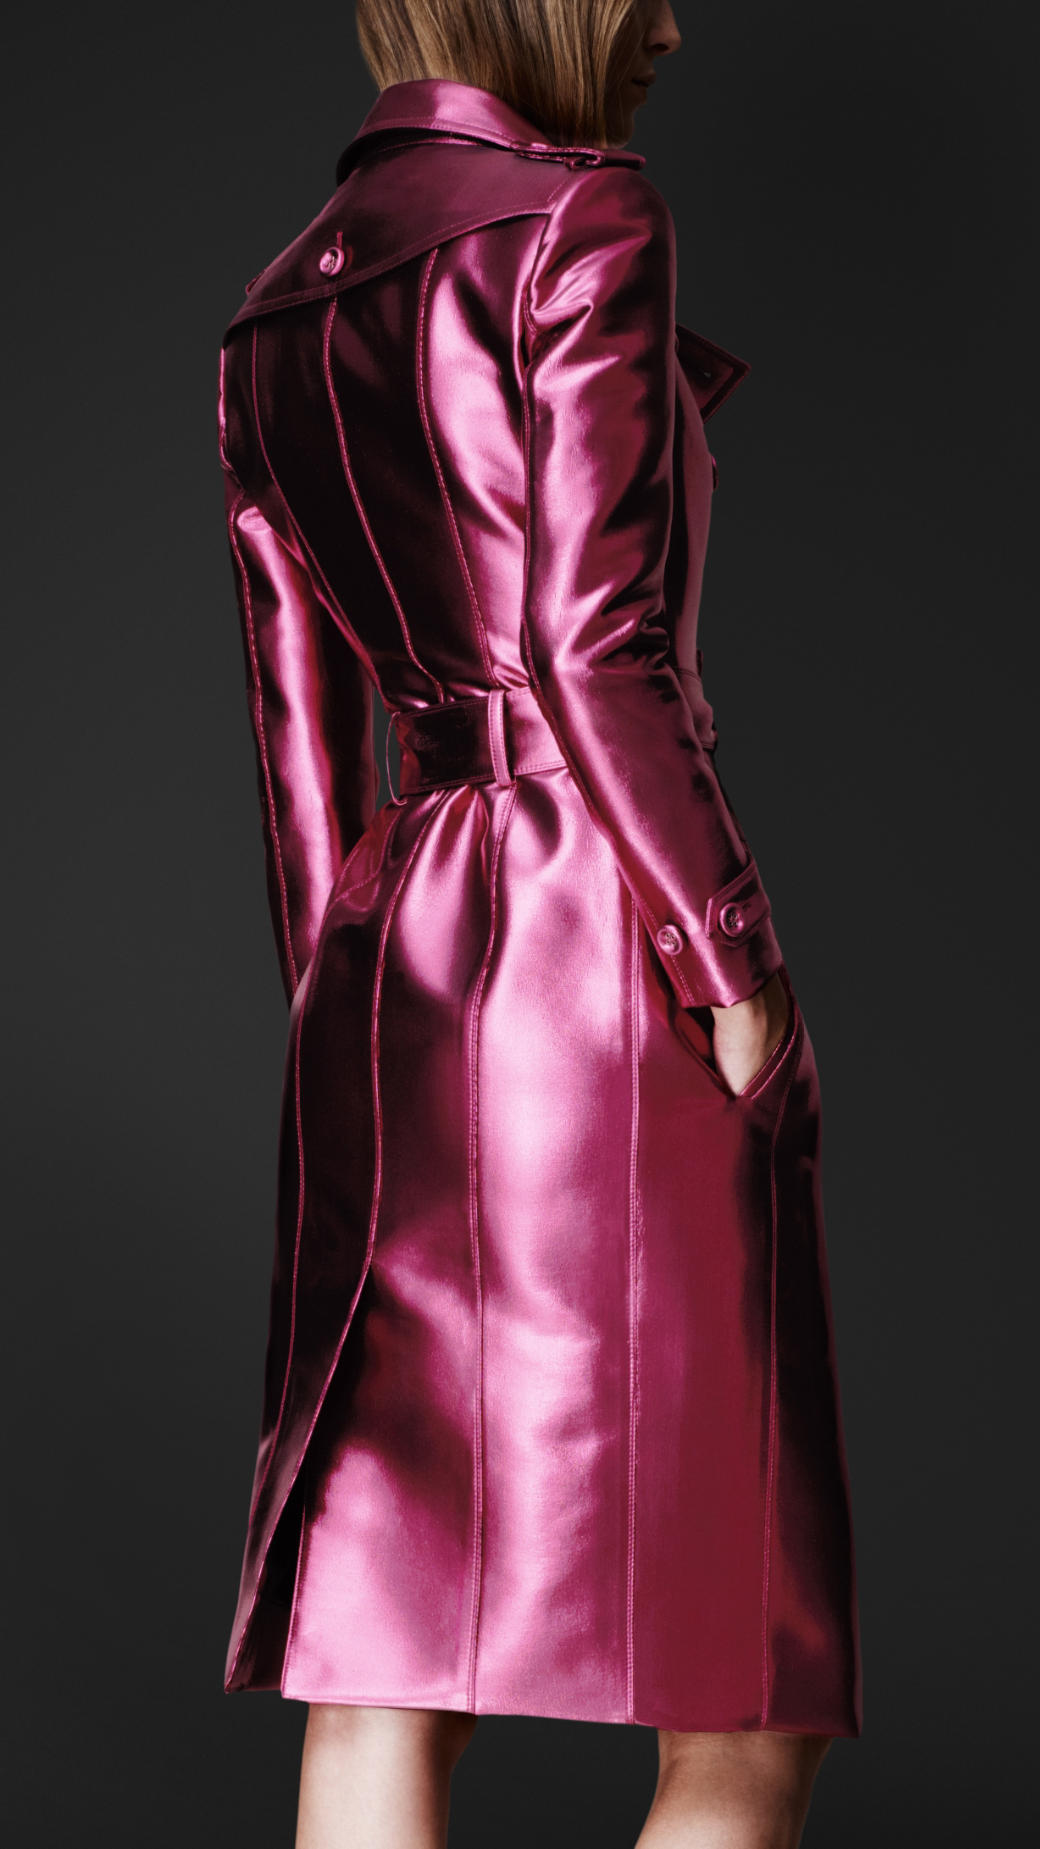 Lyst - Burberry Prorsum Bright Metallic Trench Coat in Pink